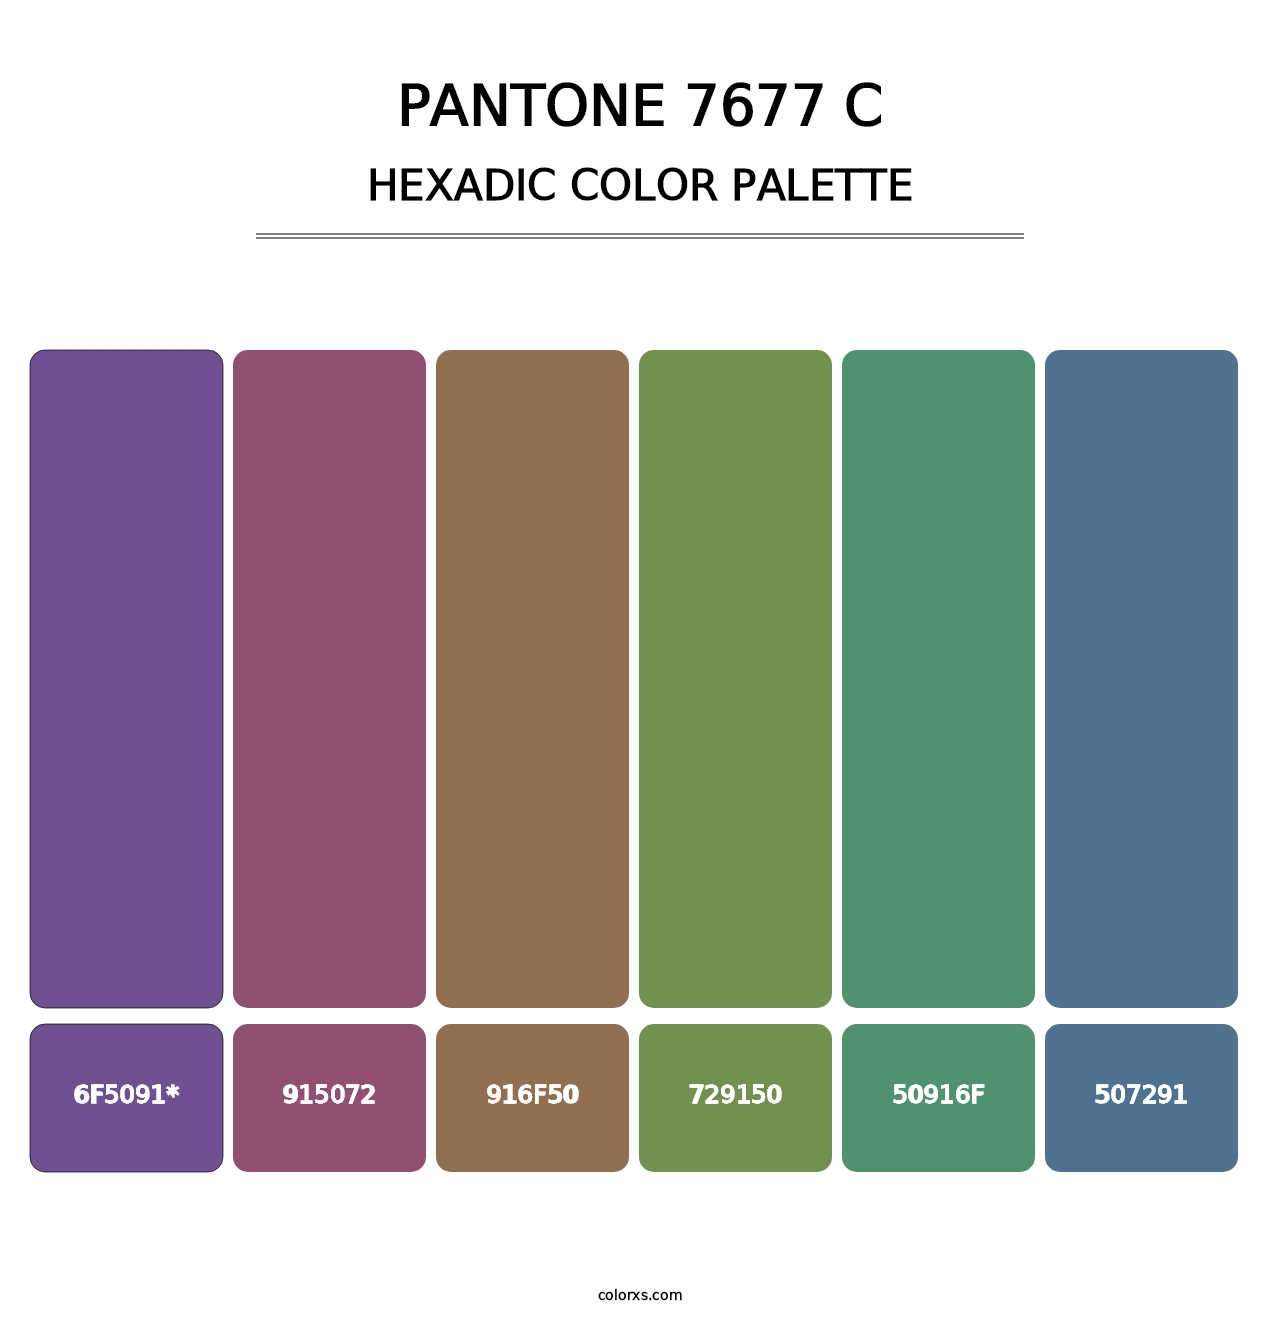 PANTONE 7677 C - Hexadic Color Palette